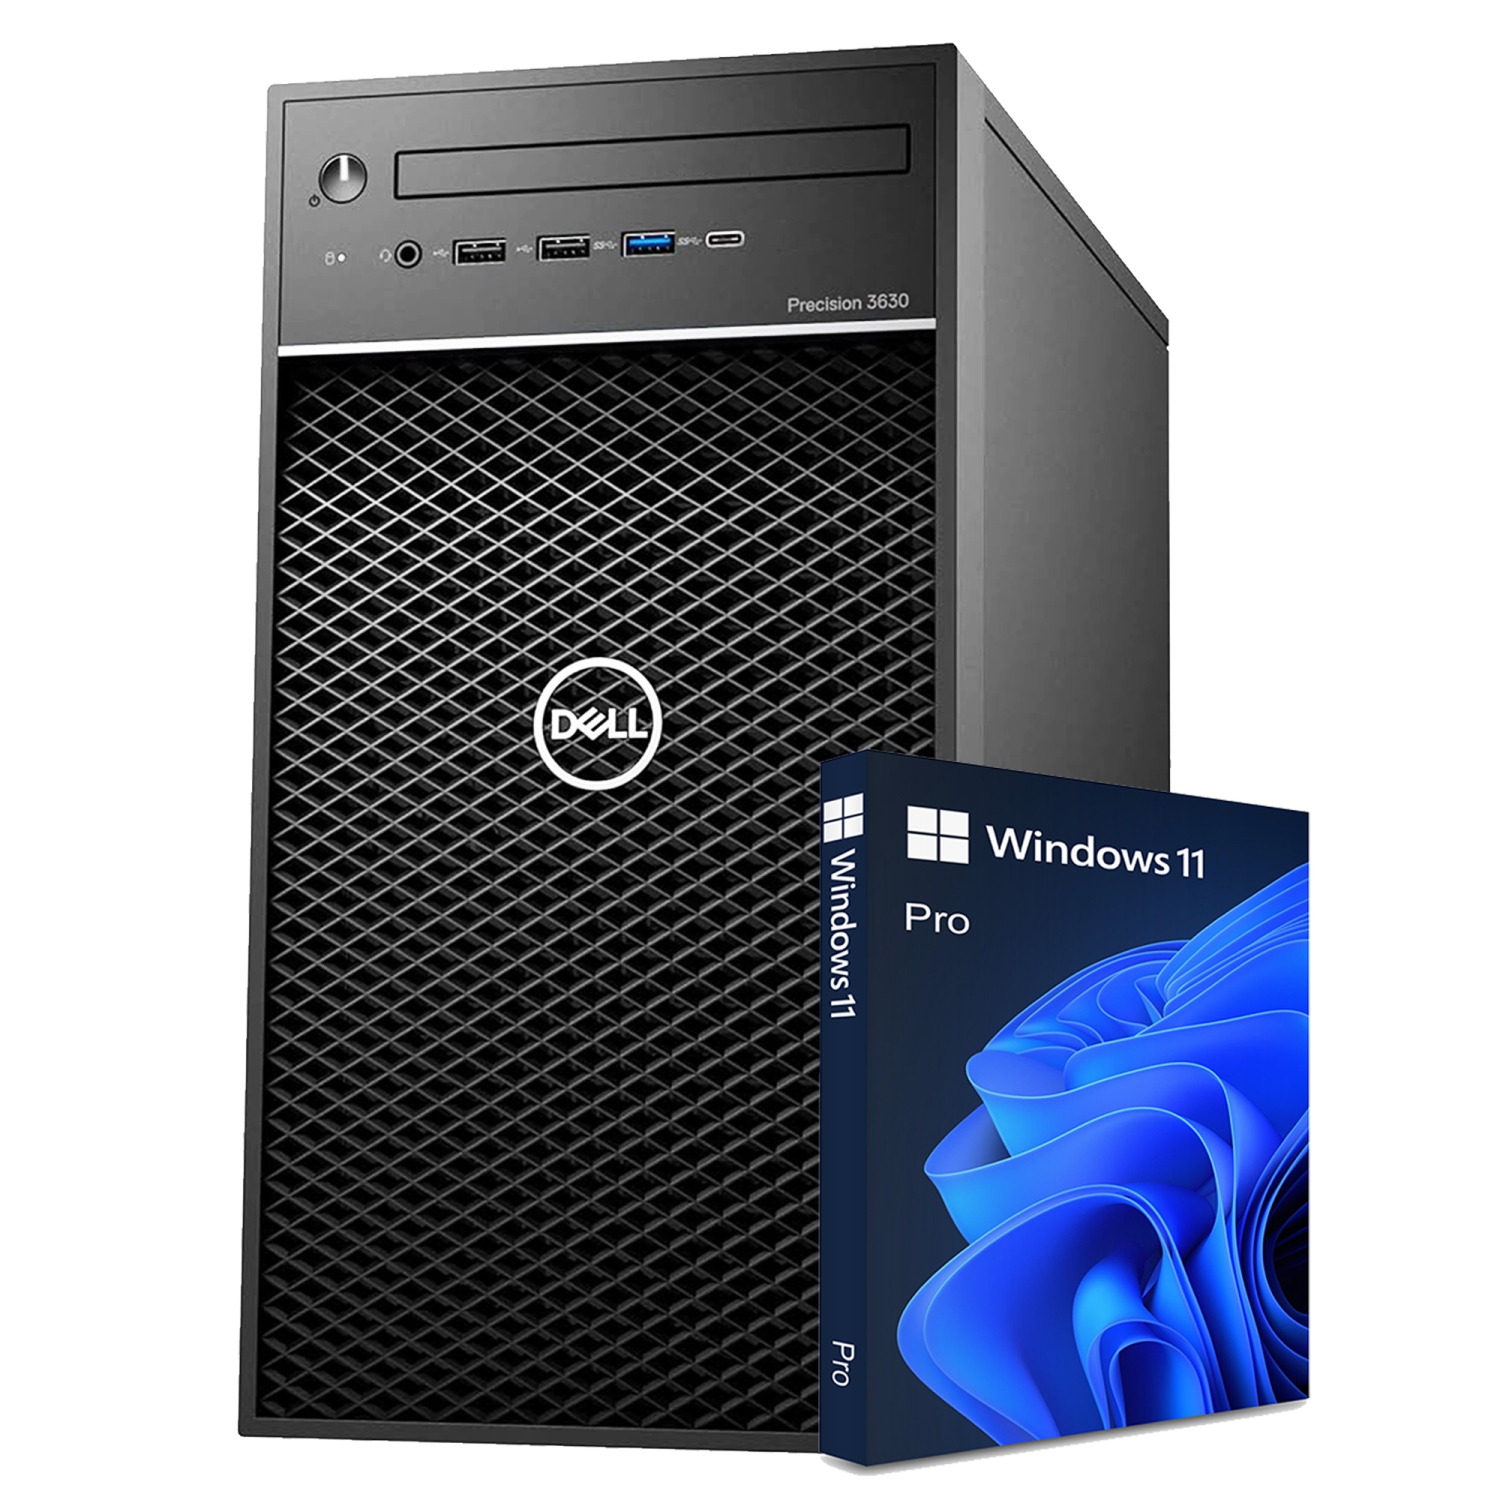 Refurbished (Good) - Desktop PC Dell Precision 3630 Business Computer Tower| Windows 11 Pro| Intel Hexa Core i7-8th Gen Processor| 16GB DDR4 RAM| 512GB SSD| WIFI/ Bluetooth Adapter